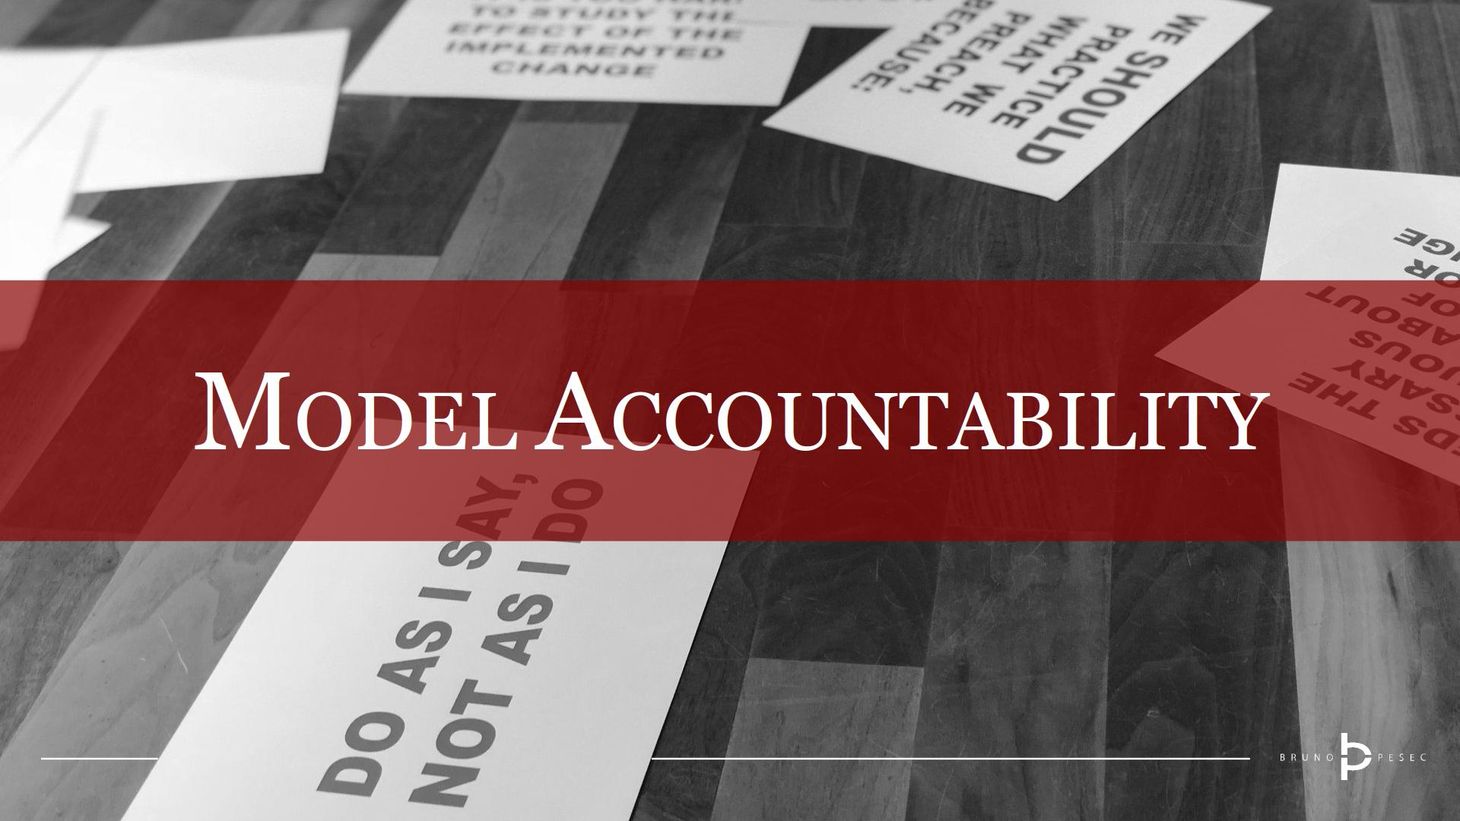 Model accountability